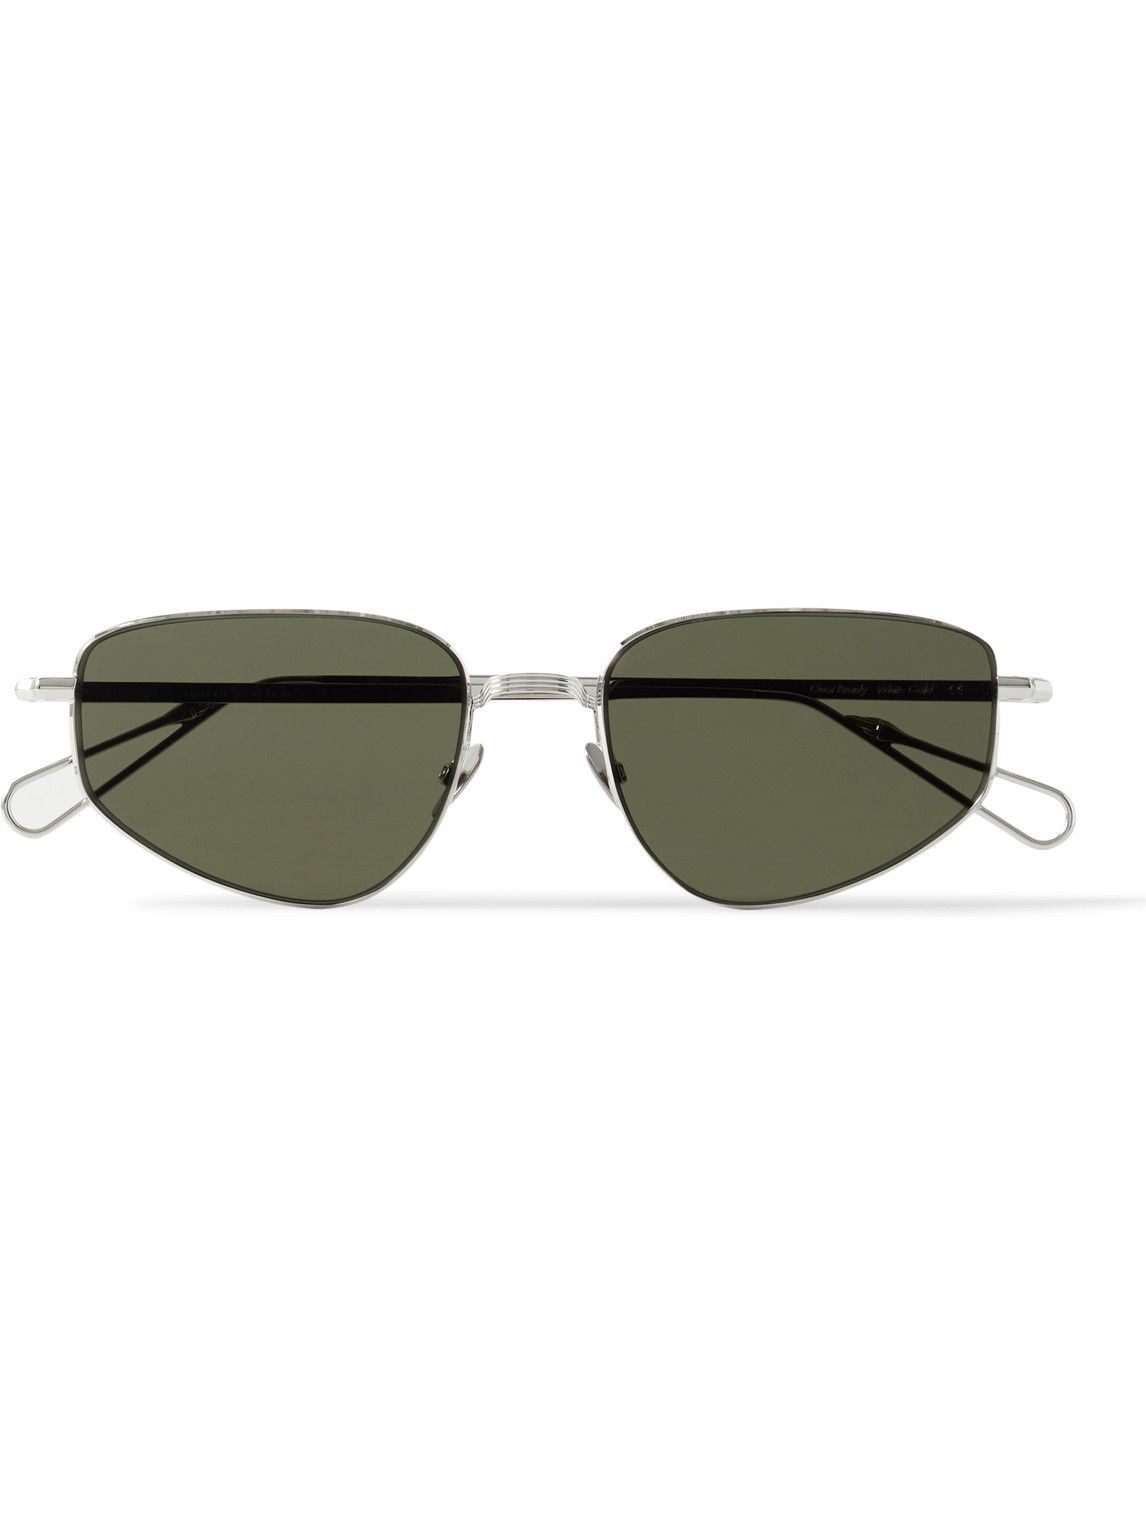 AHLEM - Quai Branly Square-Frame White Gold-Plated Sunglasses